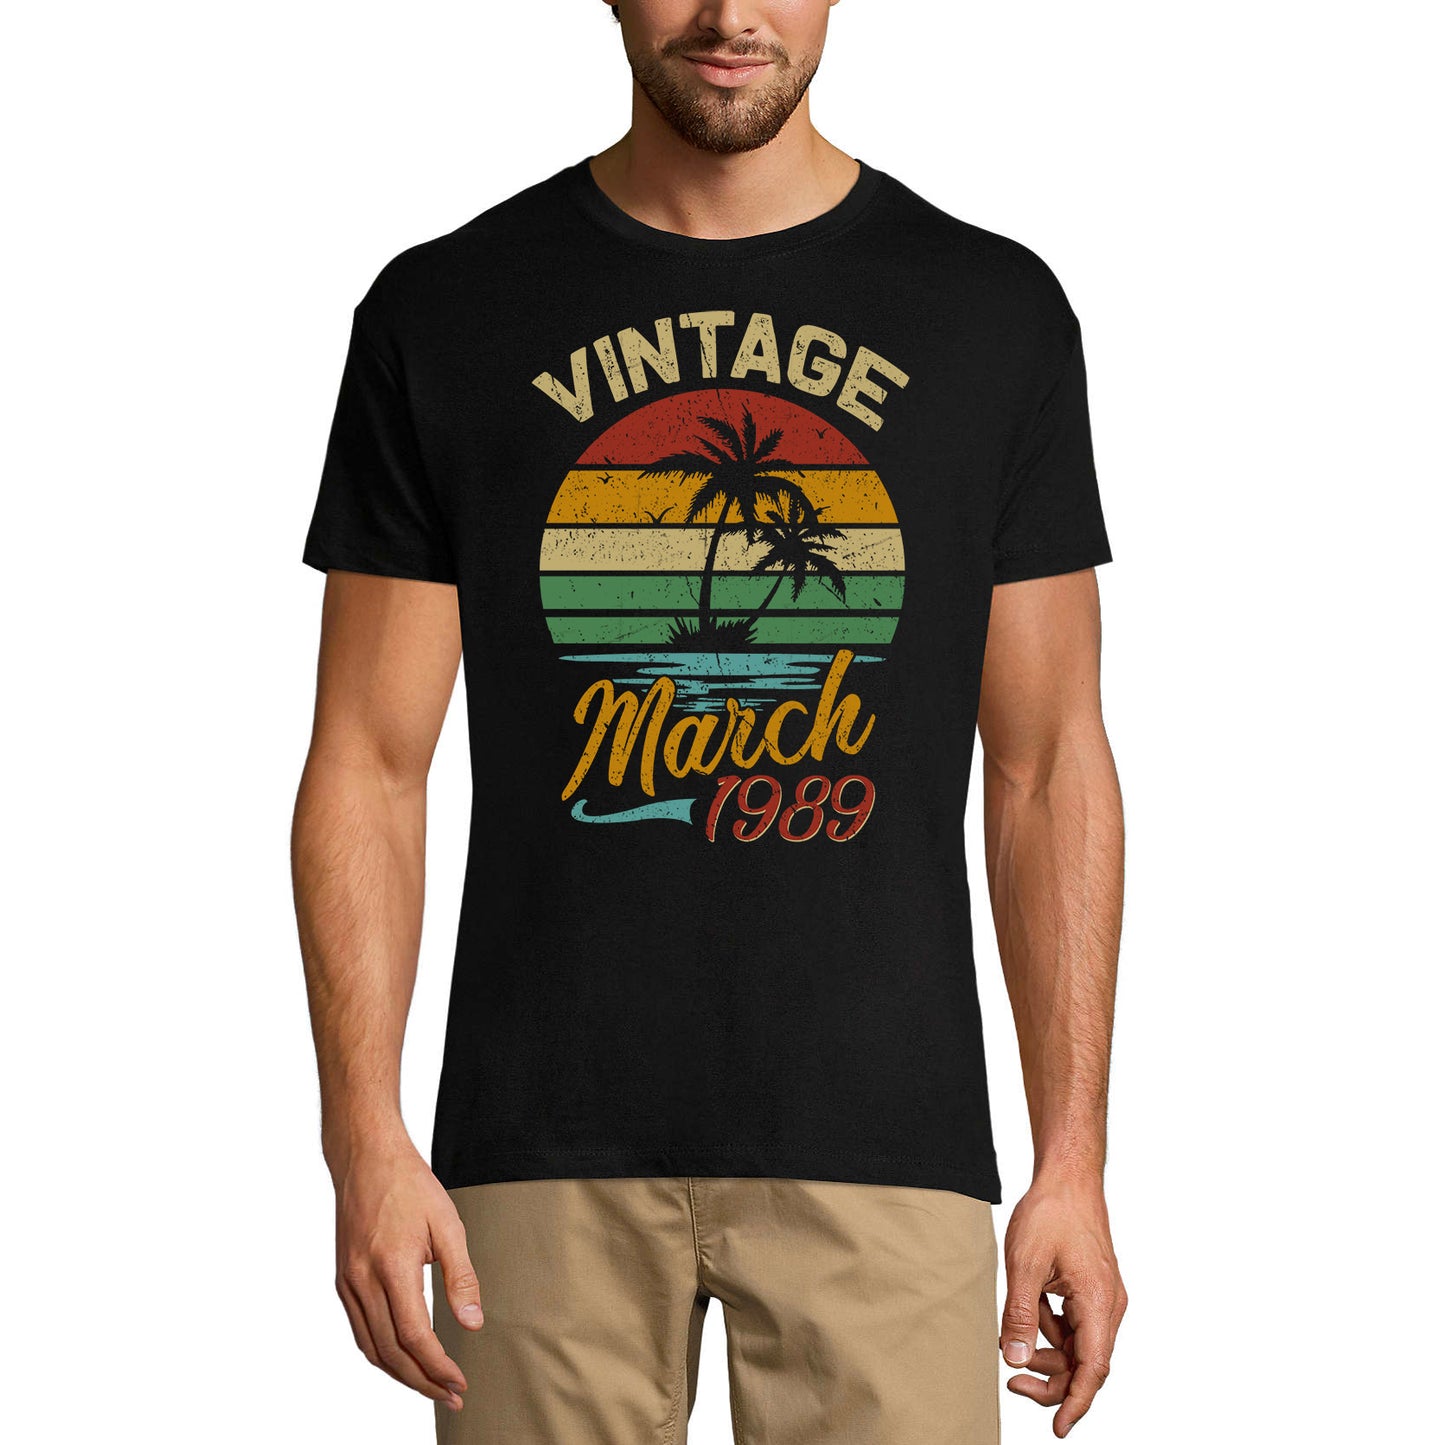 ULTRABASIC Men's T-Shirt Vintage March 1989 - Retro Sunset 32nd Birthday Gift Tee Shirt